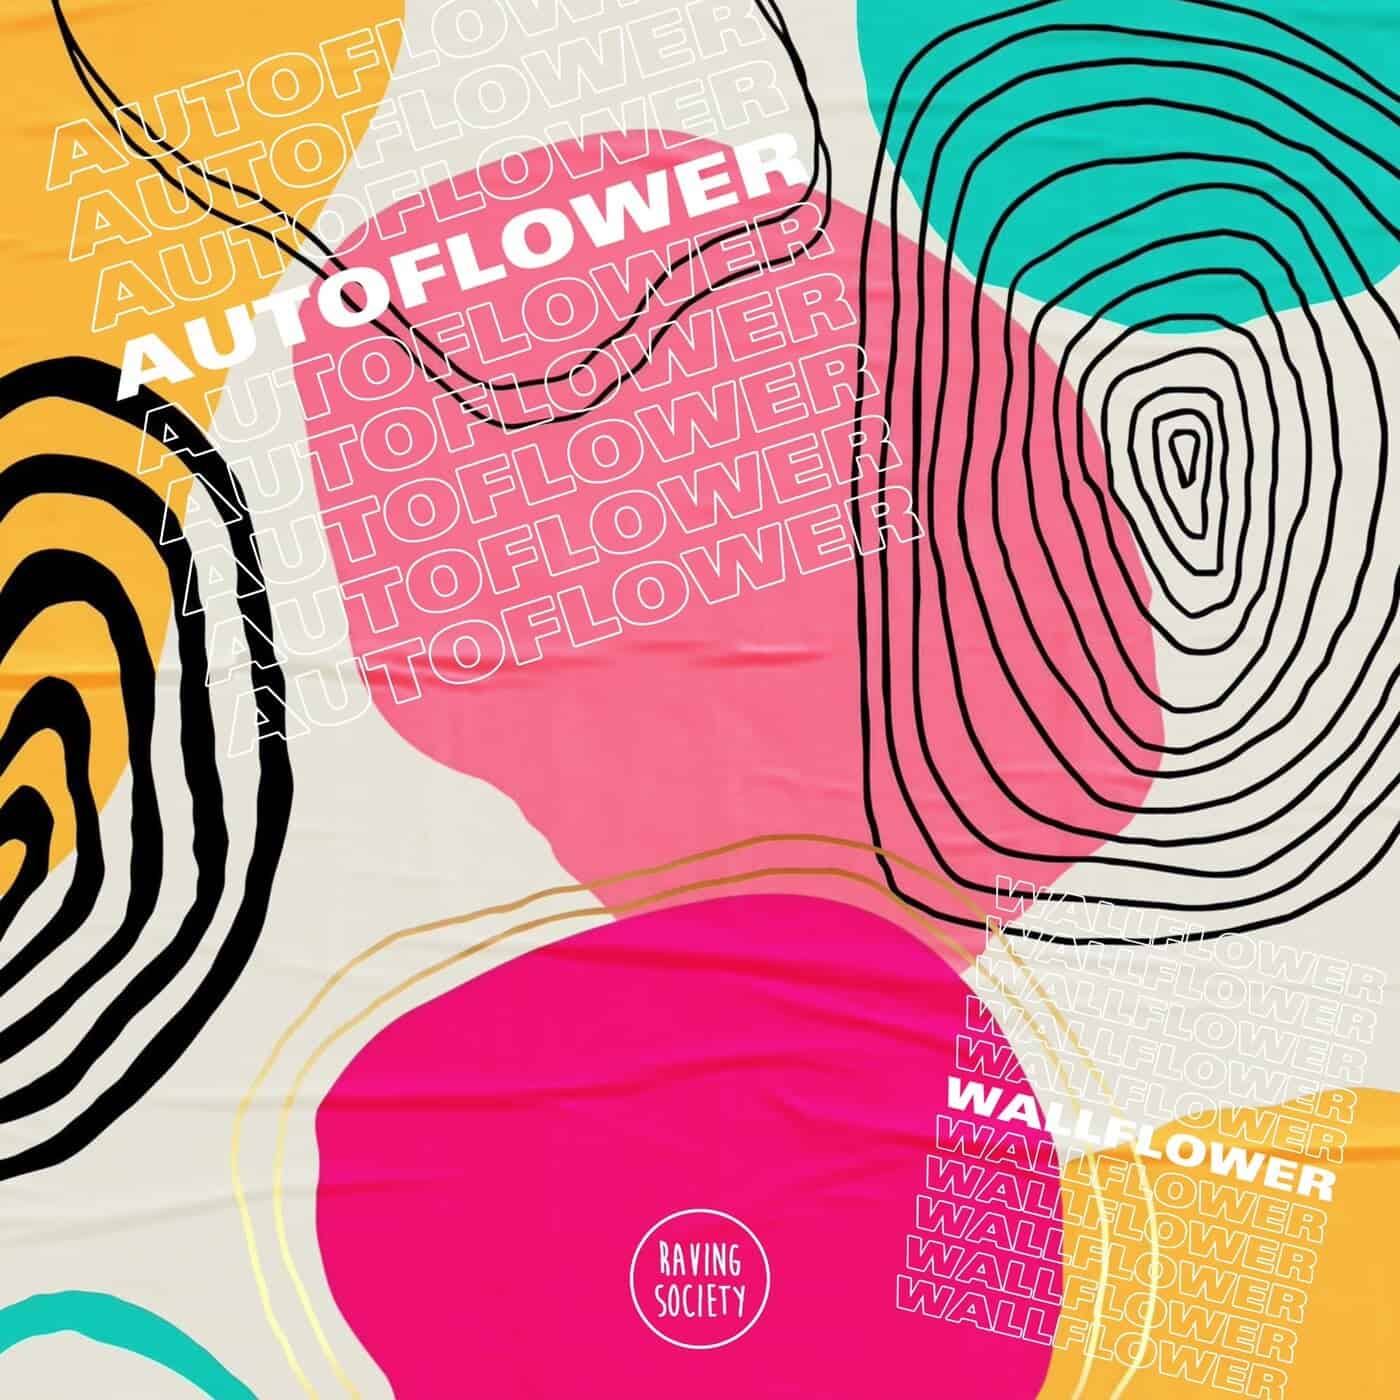 image cover: AUTOFLOWER - Wallflower on Raving Society